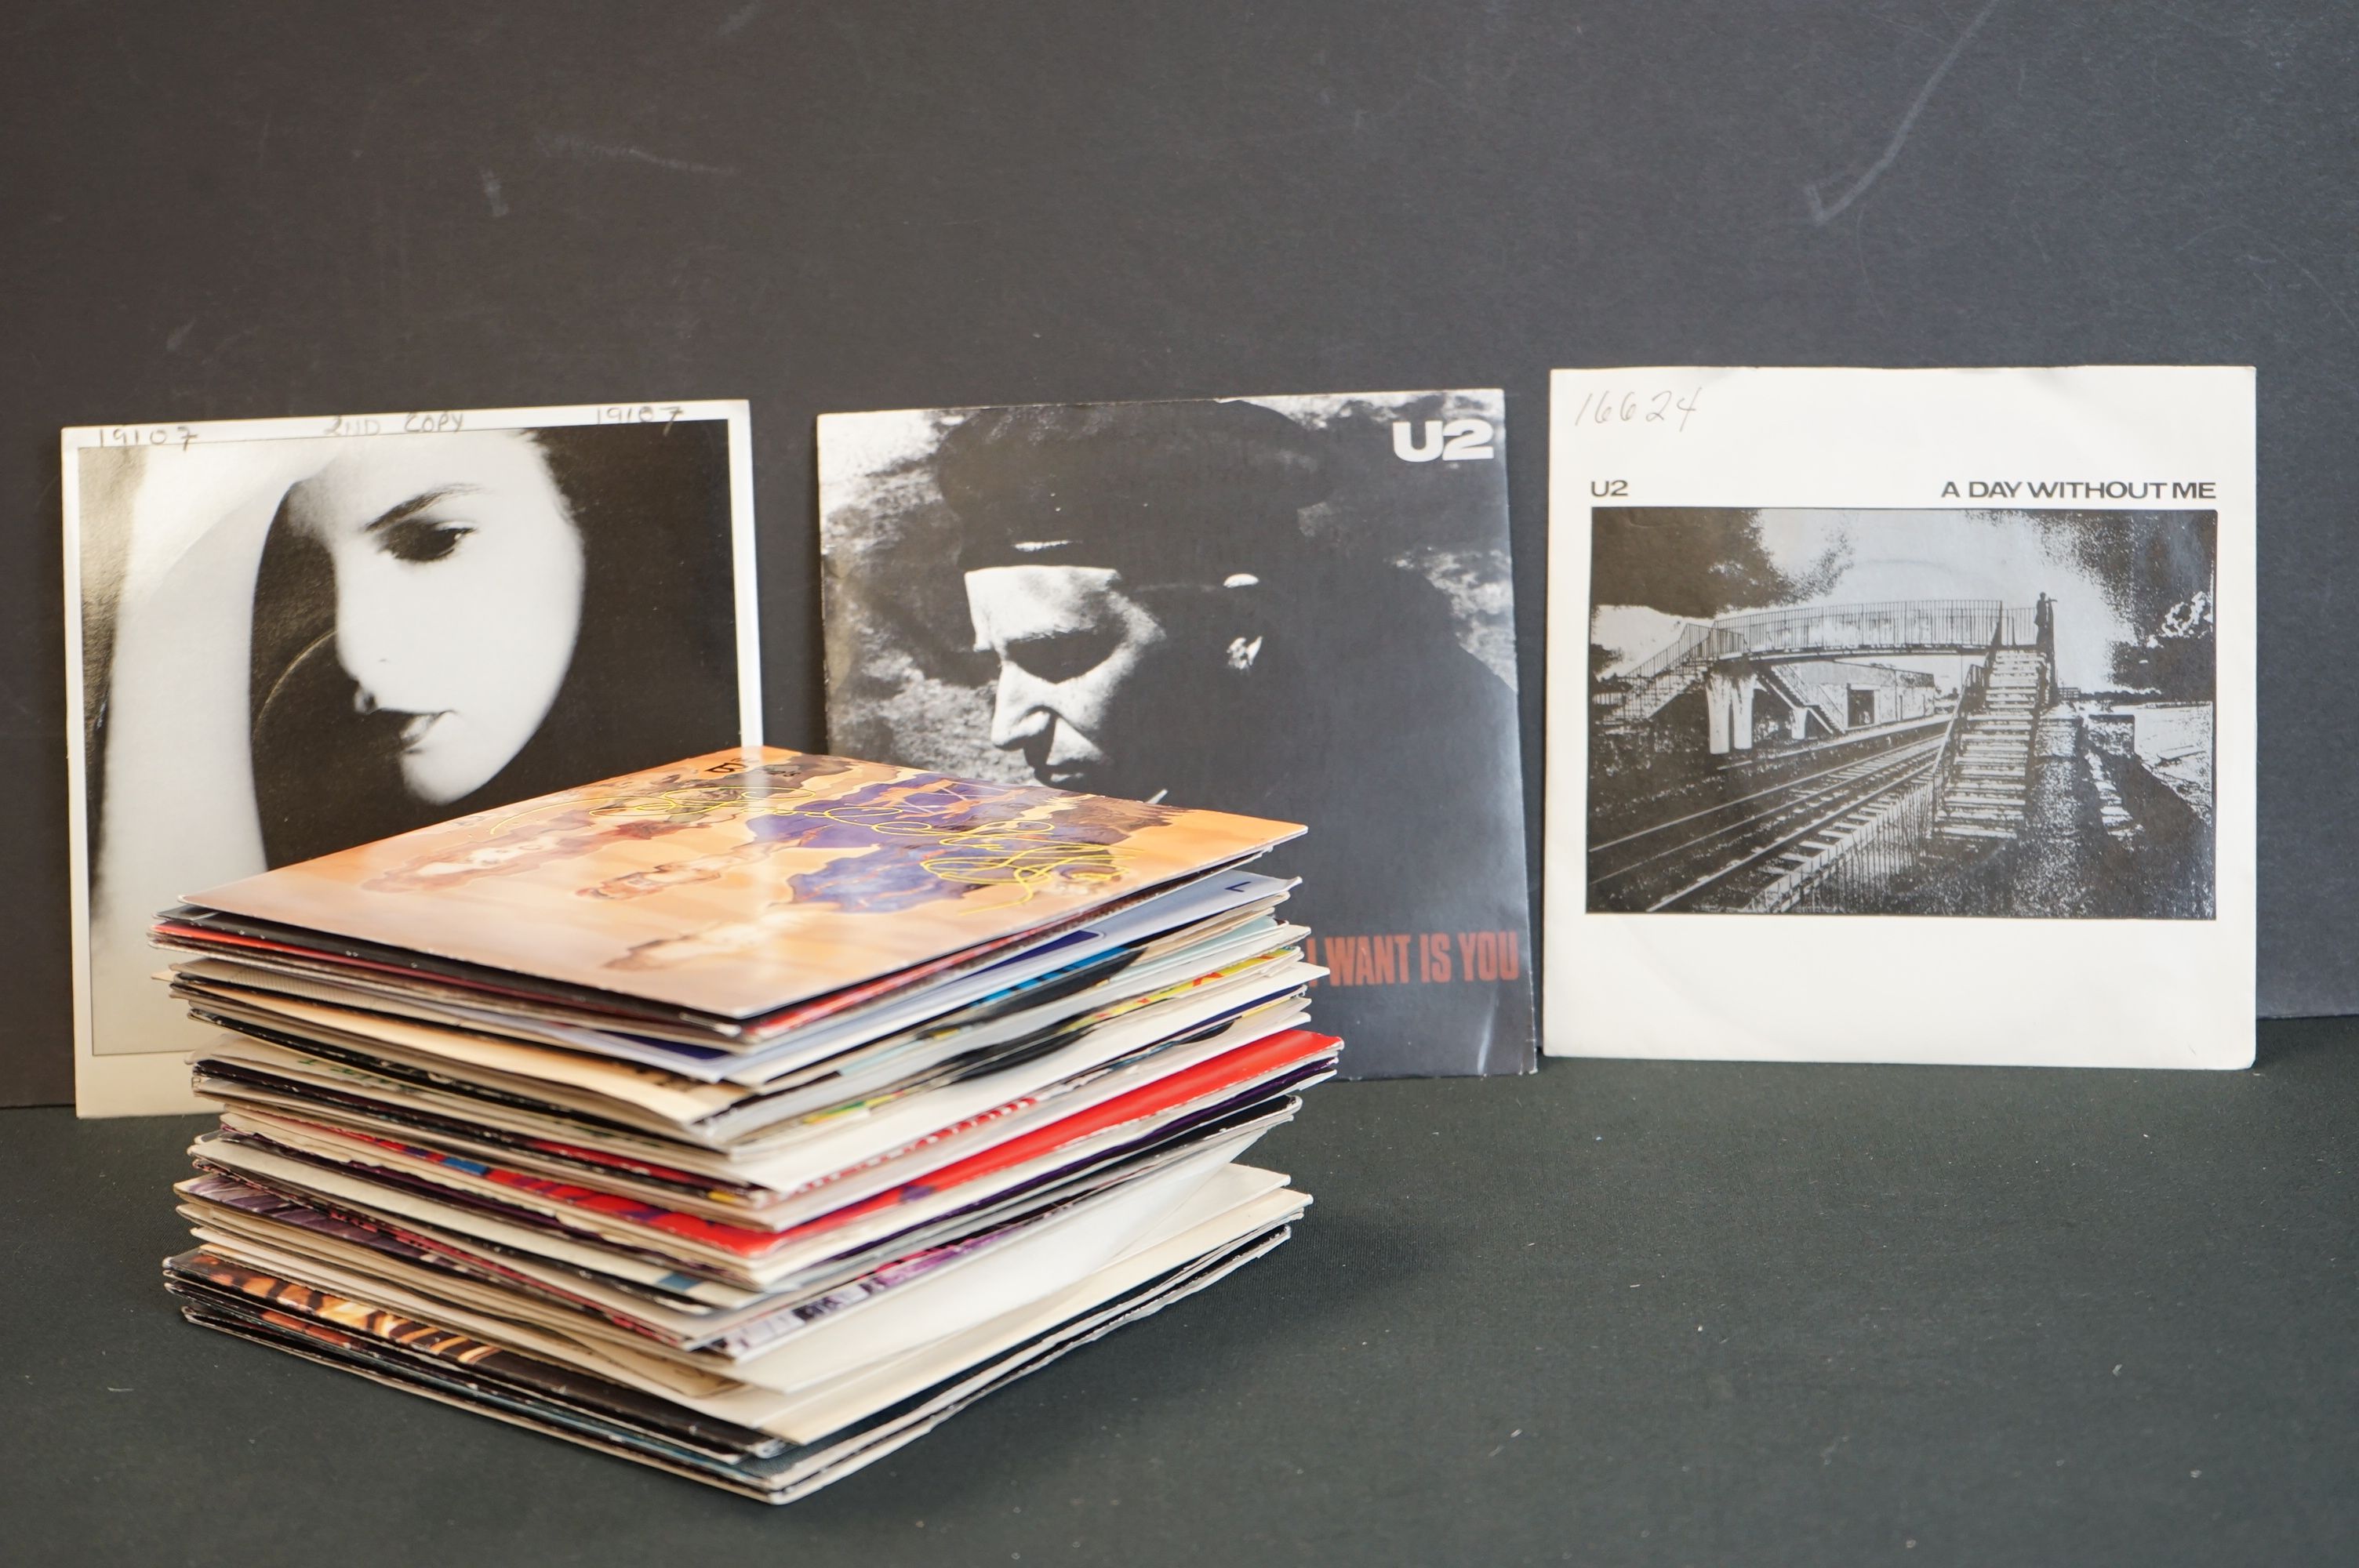 Vinyl - Over 40 Post Punk / New Wave 7" singles including U2, Blondie, B52's, Pere Ubu, B Movie,